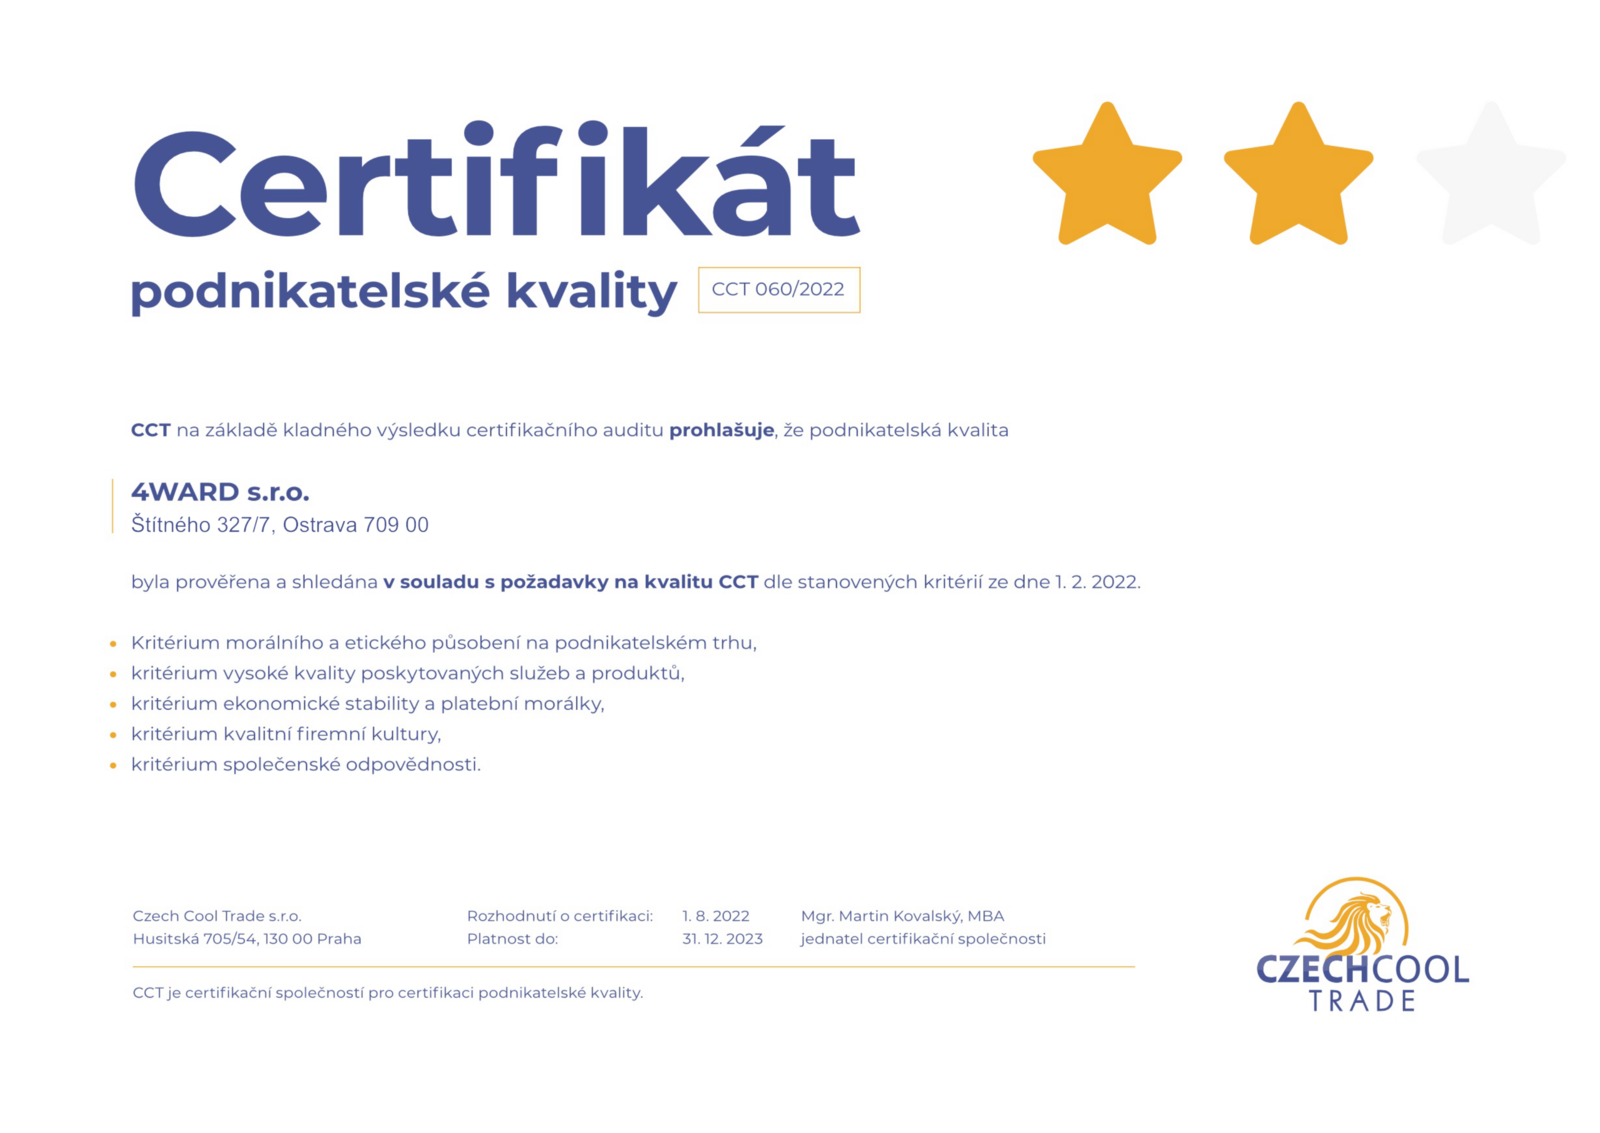 CCT certificate